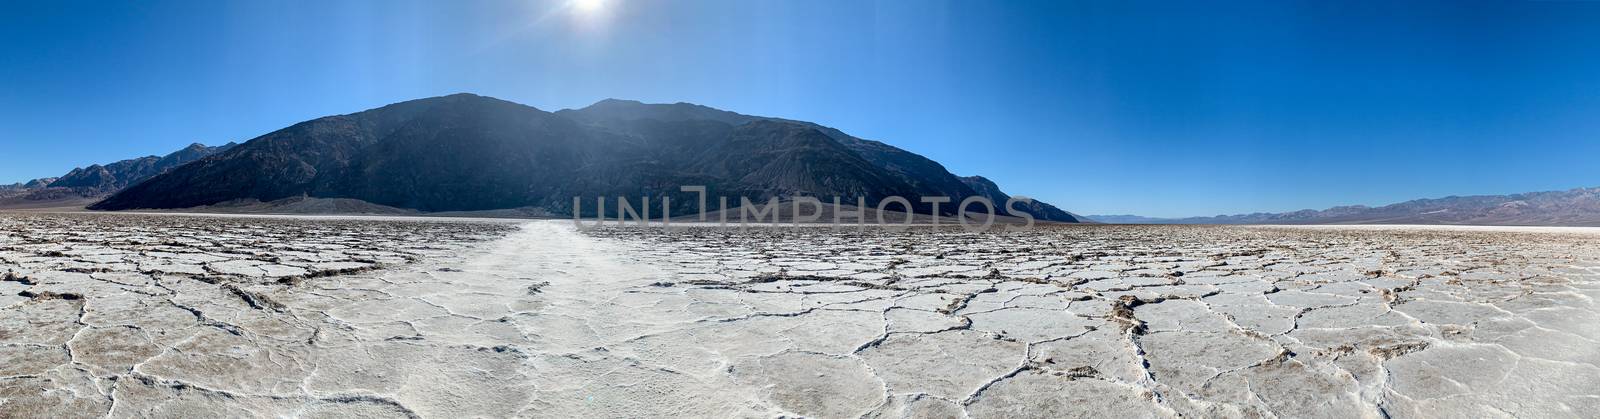 Death Valley national park, California, USA by nicousnake